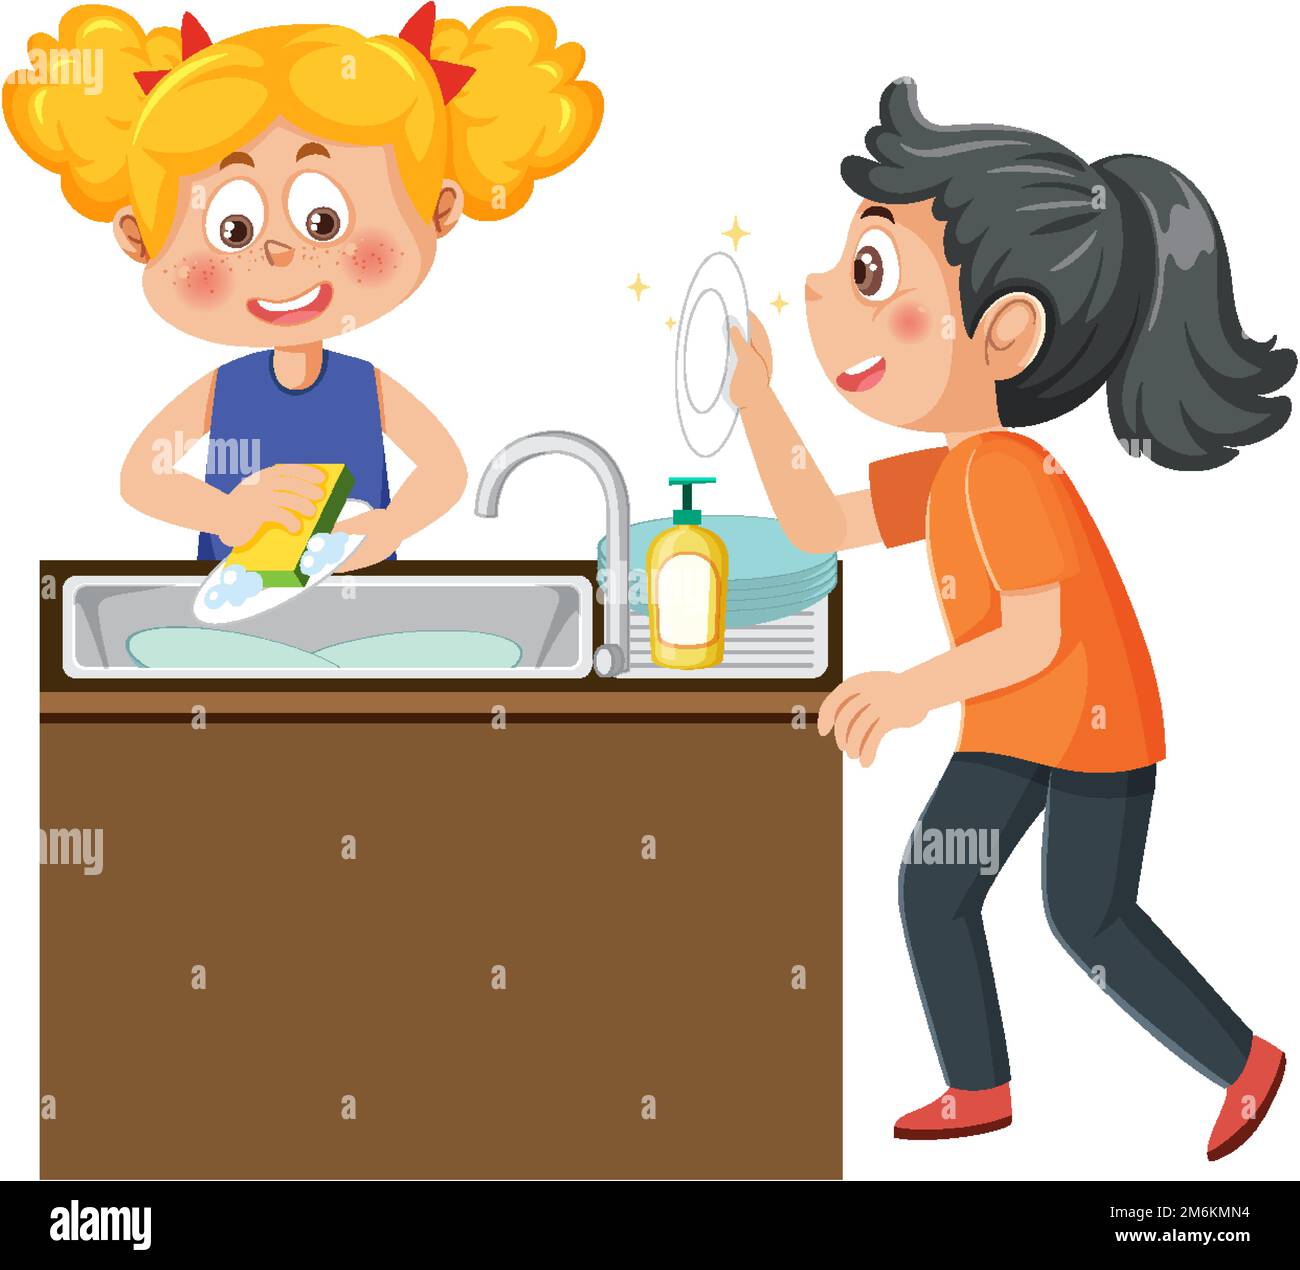 https://c8.alamy.com/comp/2M6KMN4/two-kids-washing-dishes-together-illustration-2M6KMN4.jpg